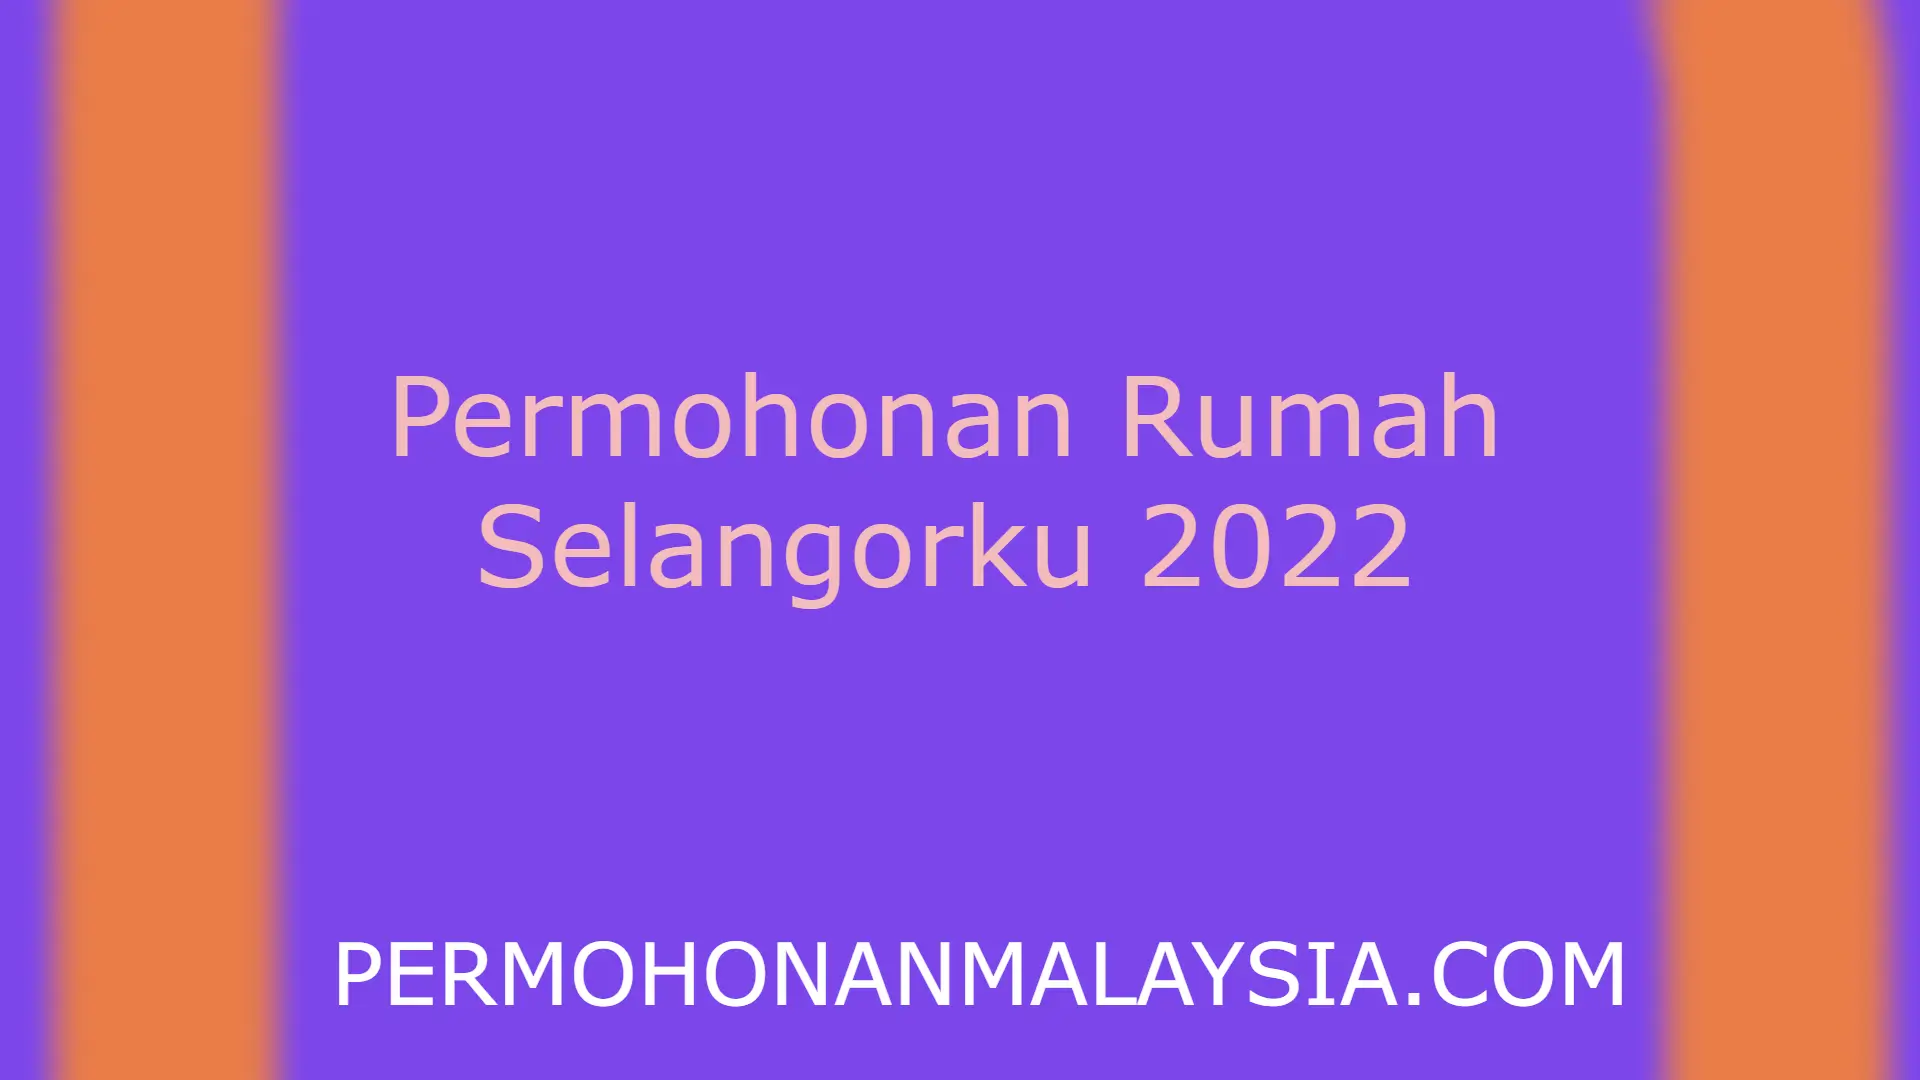 Permohonan Rumah Selangorku 2022